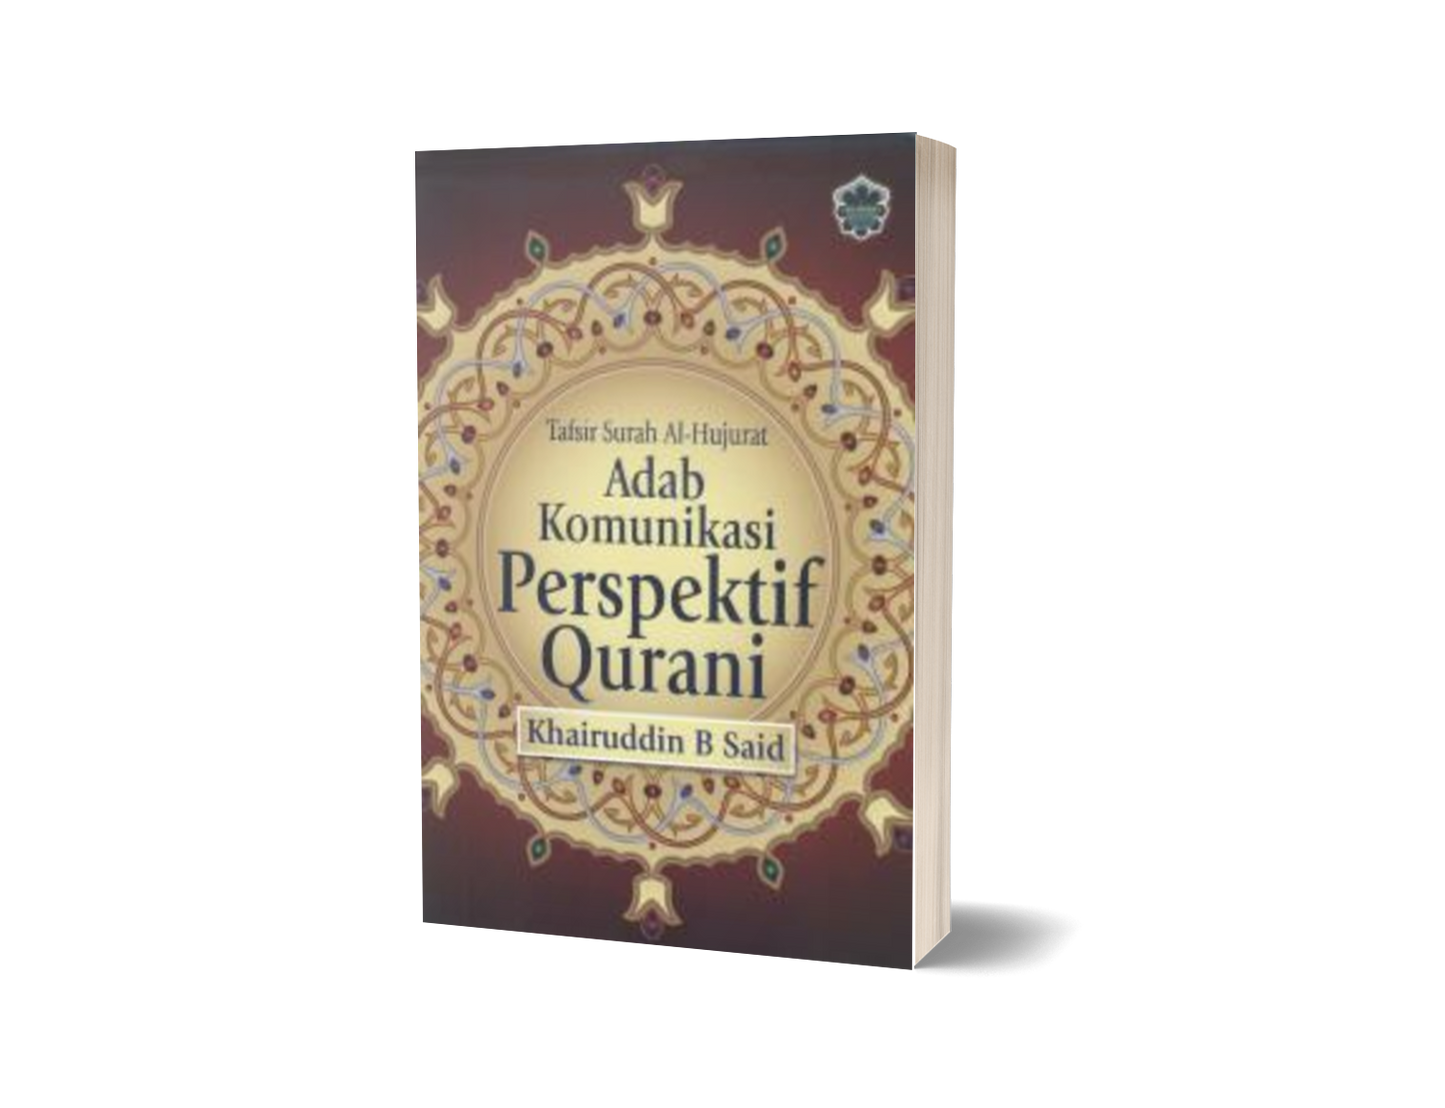 Adab Komunikasi Perspektif Qurani